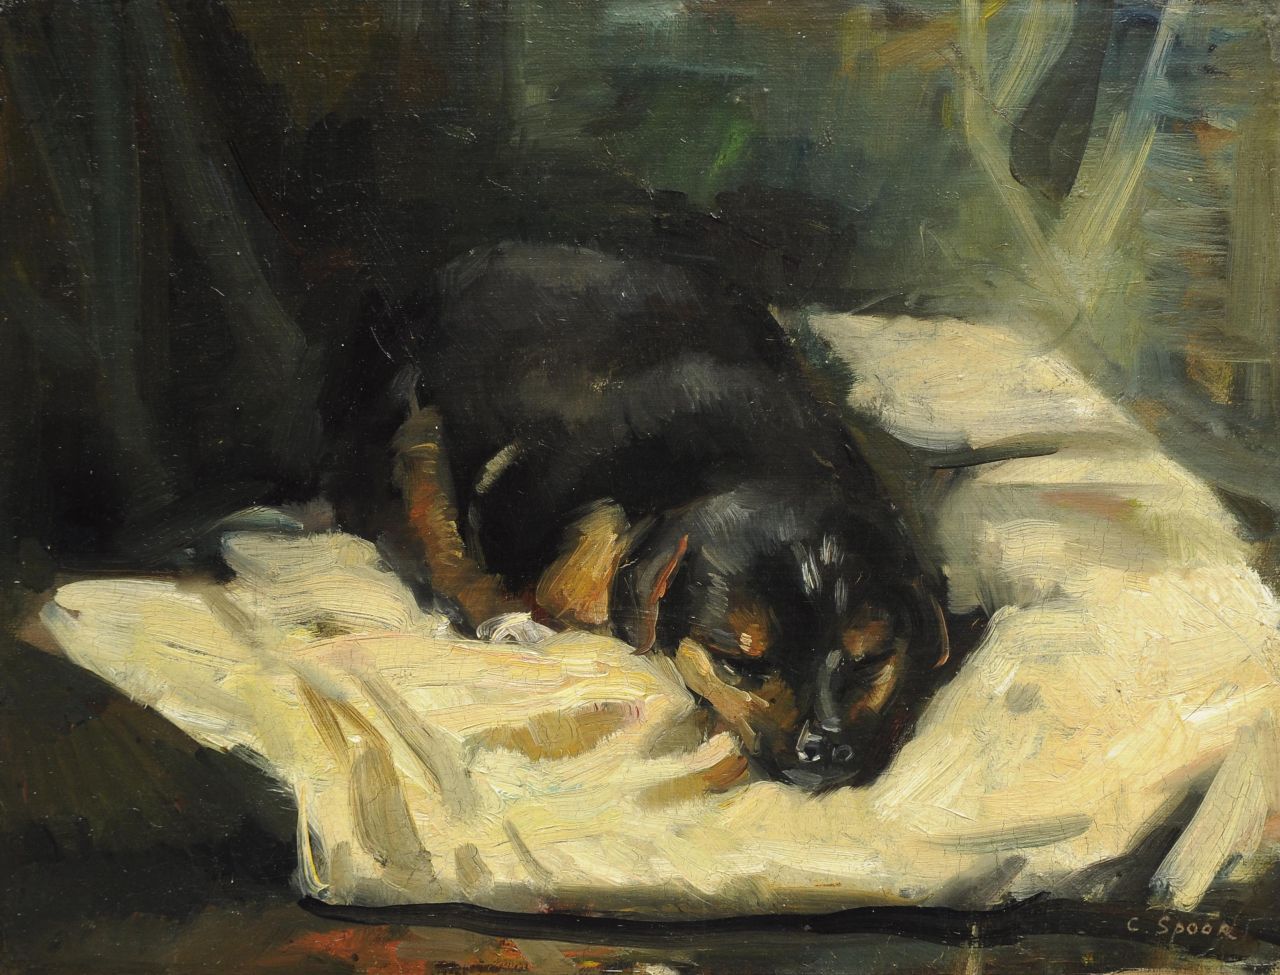 Spoor C.R.H.  | 'Cornelis' Rudolf Hendrik  Spoor, A sleeping dog, oil on canvas laid down on board 28.0 x 36.5 cm, signed l.r.